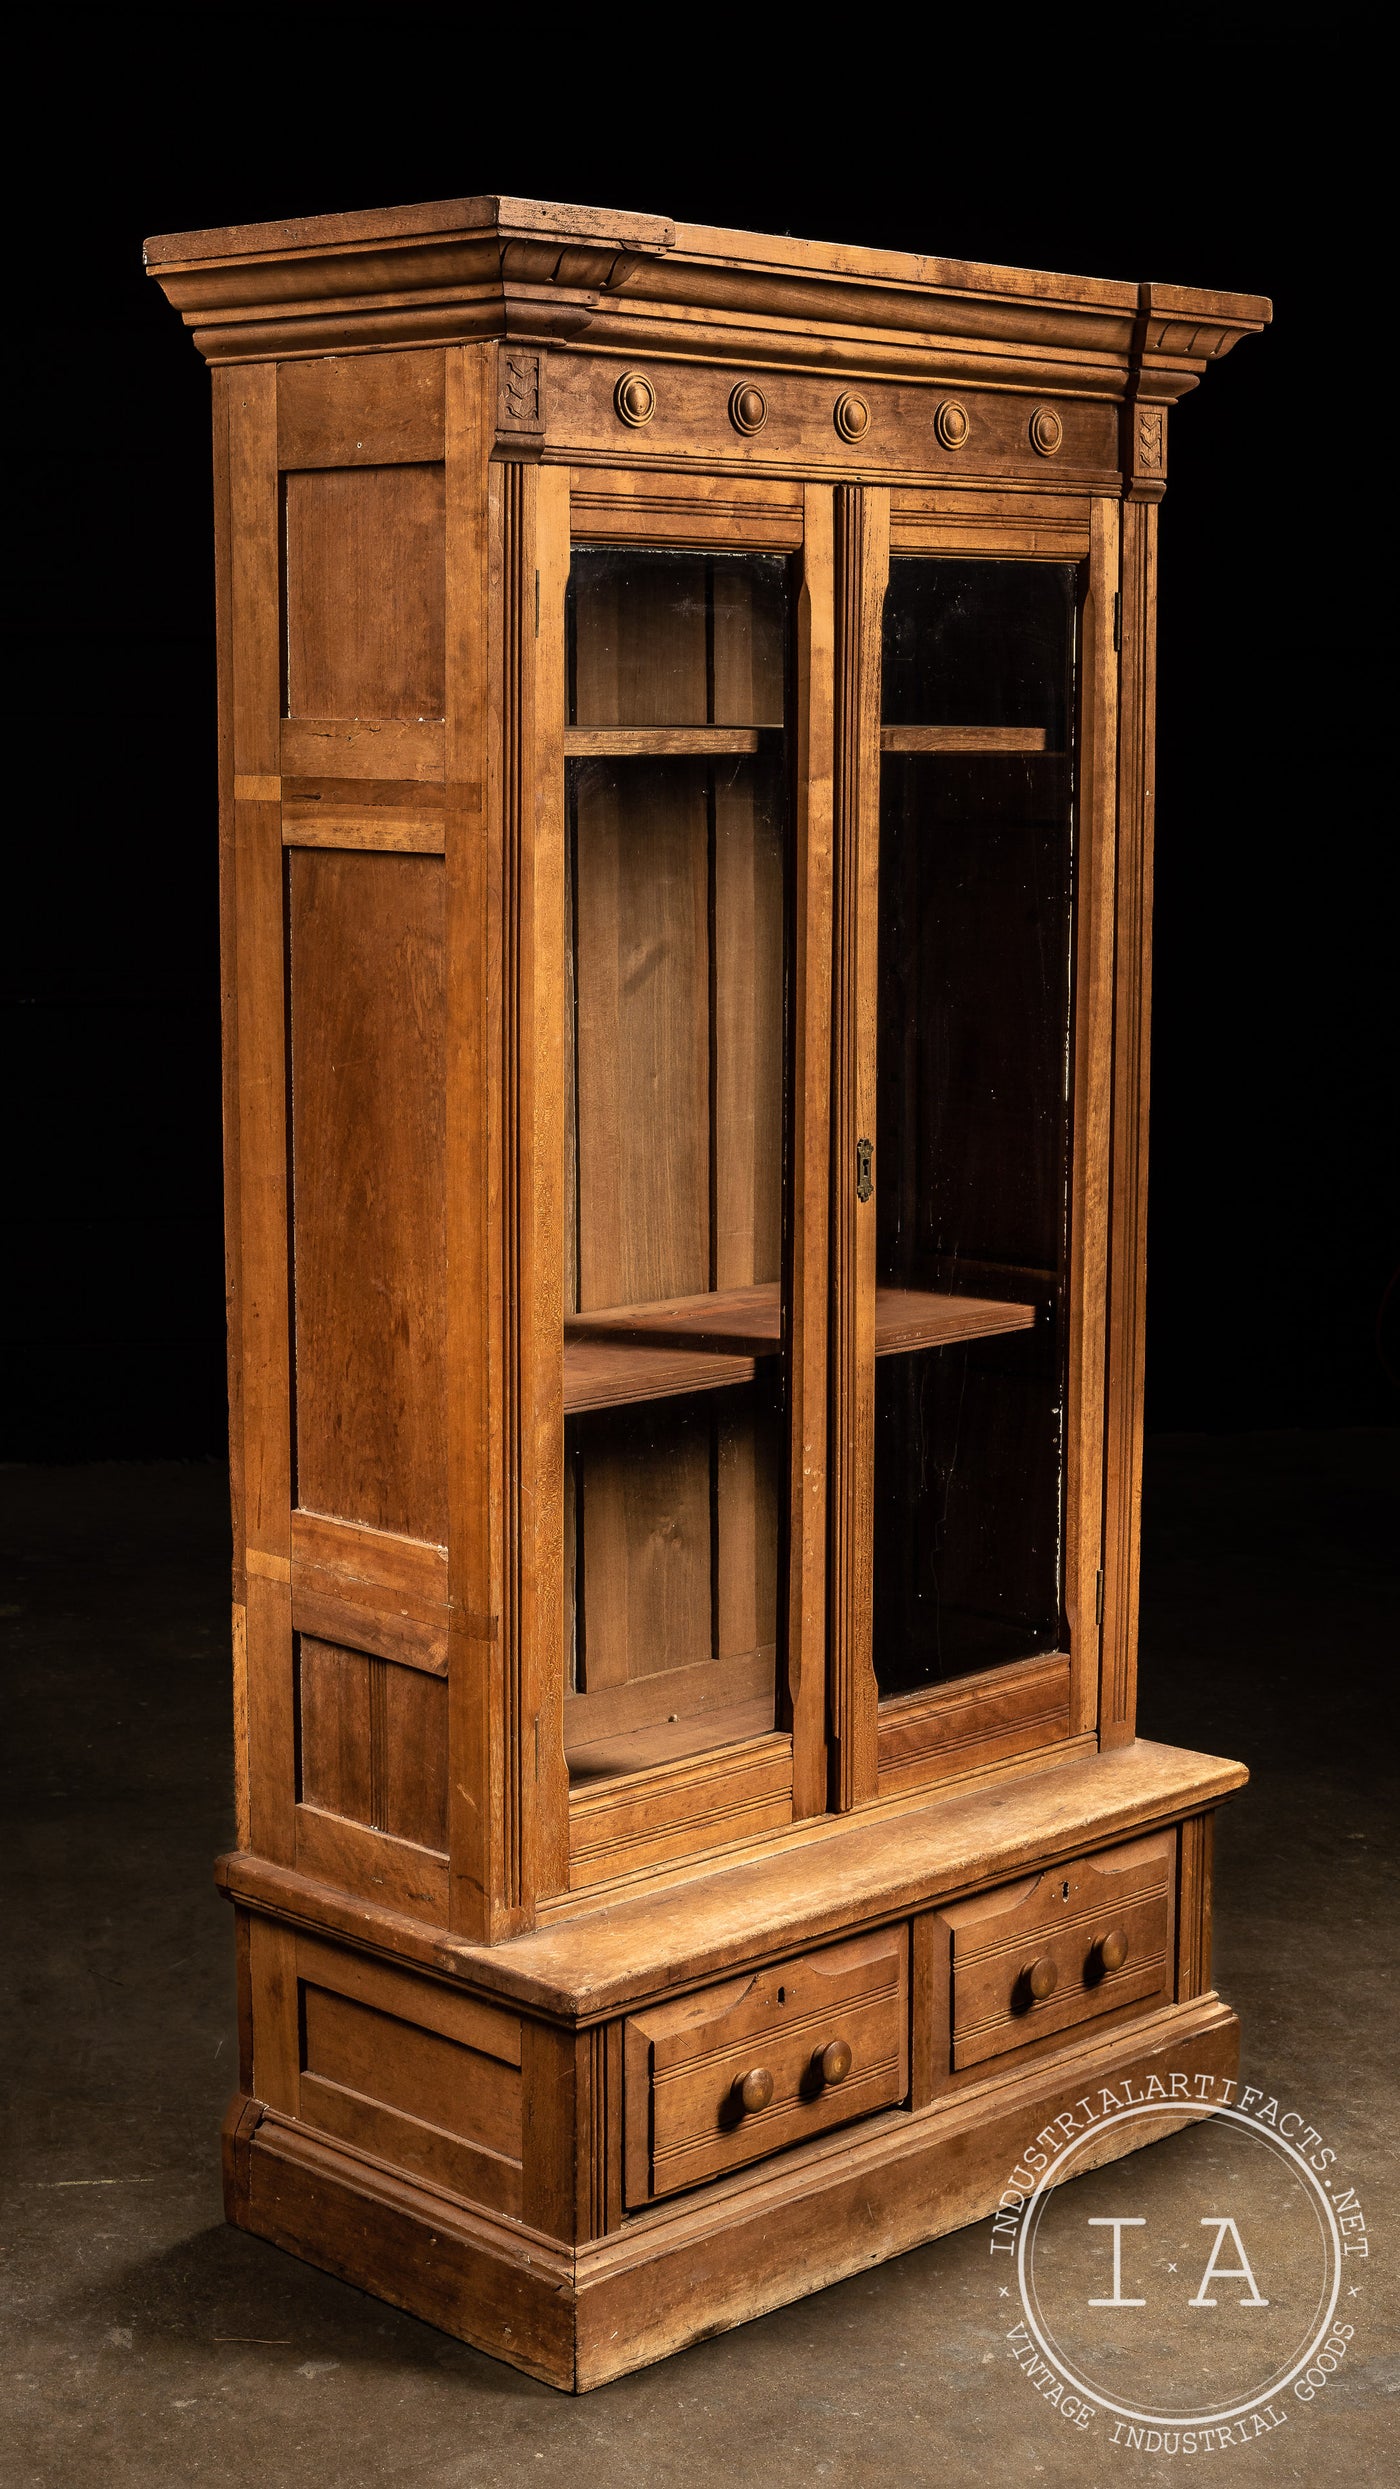 Vintage Wooden Display Cabinet